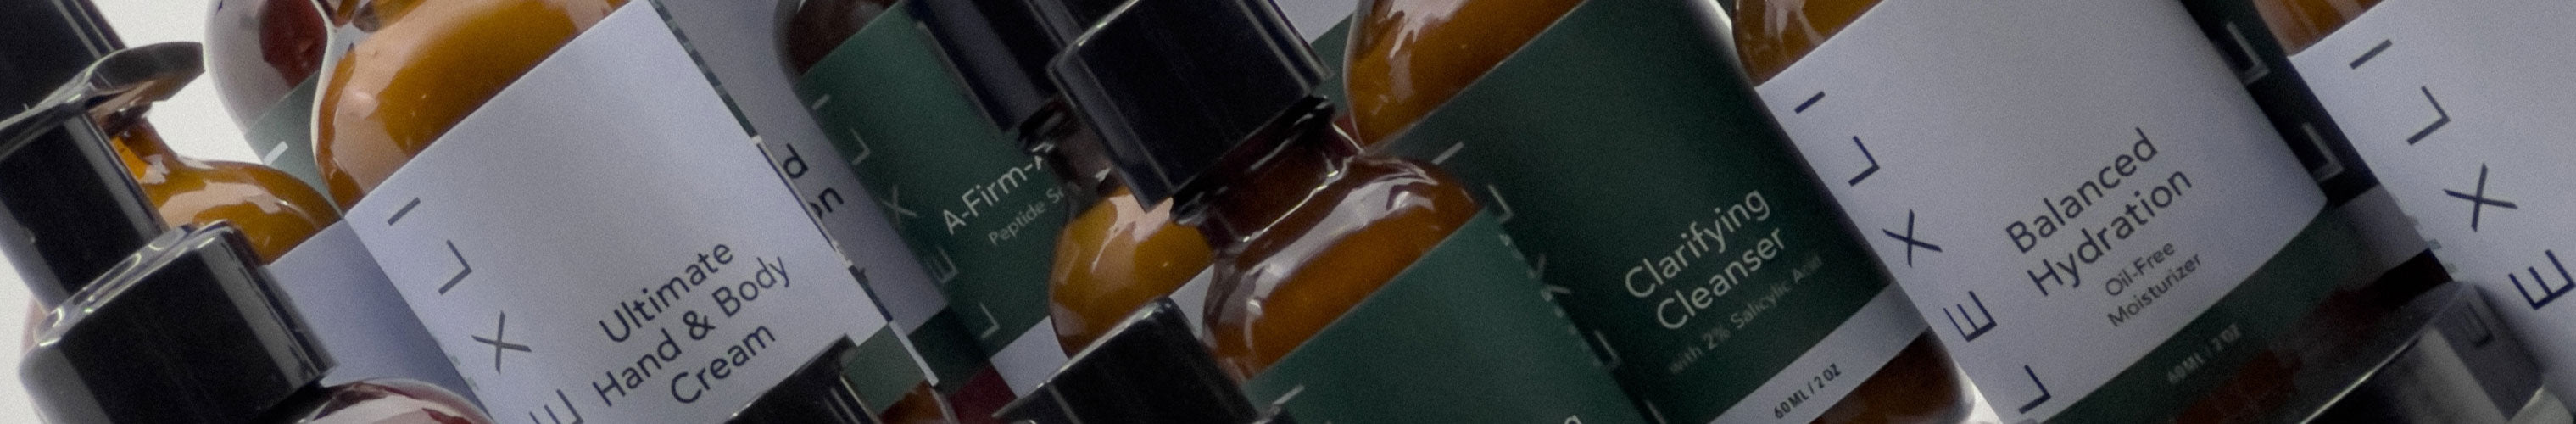 close up of Lexli skin care bottles